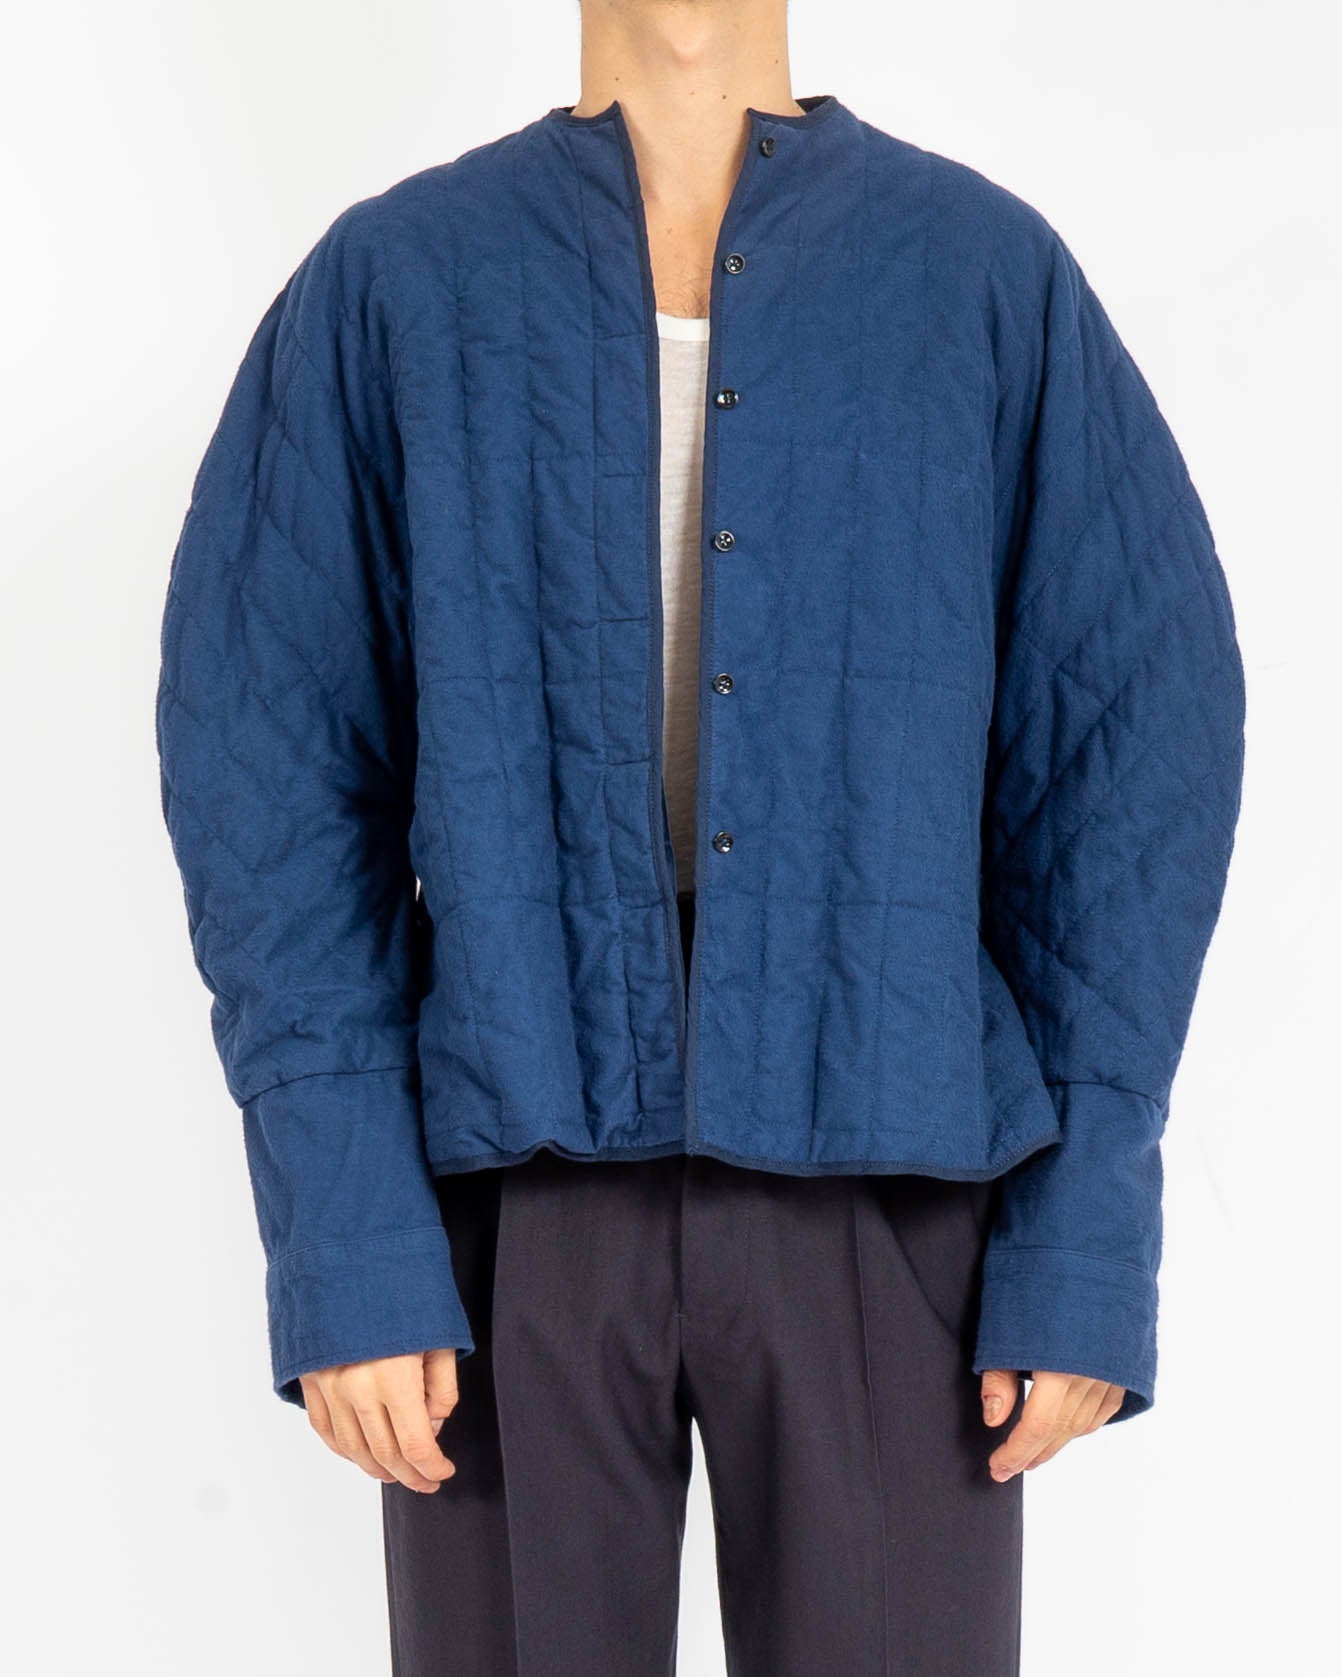 FW17 Blue Quilted Mandarin Shirt Jacket